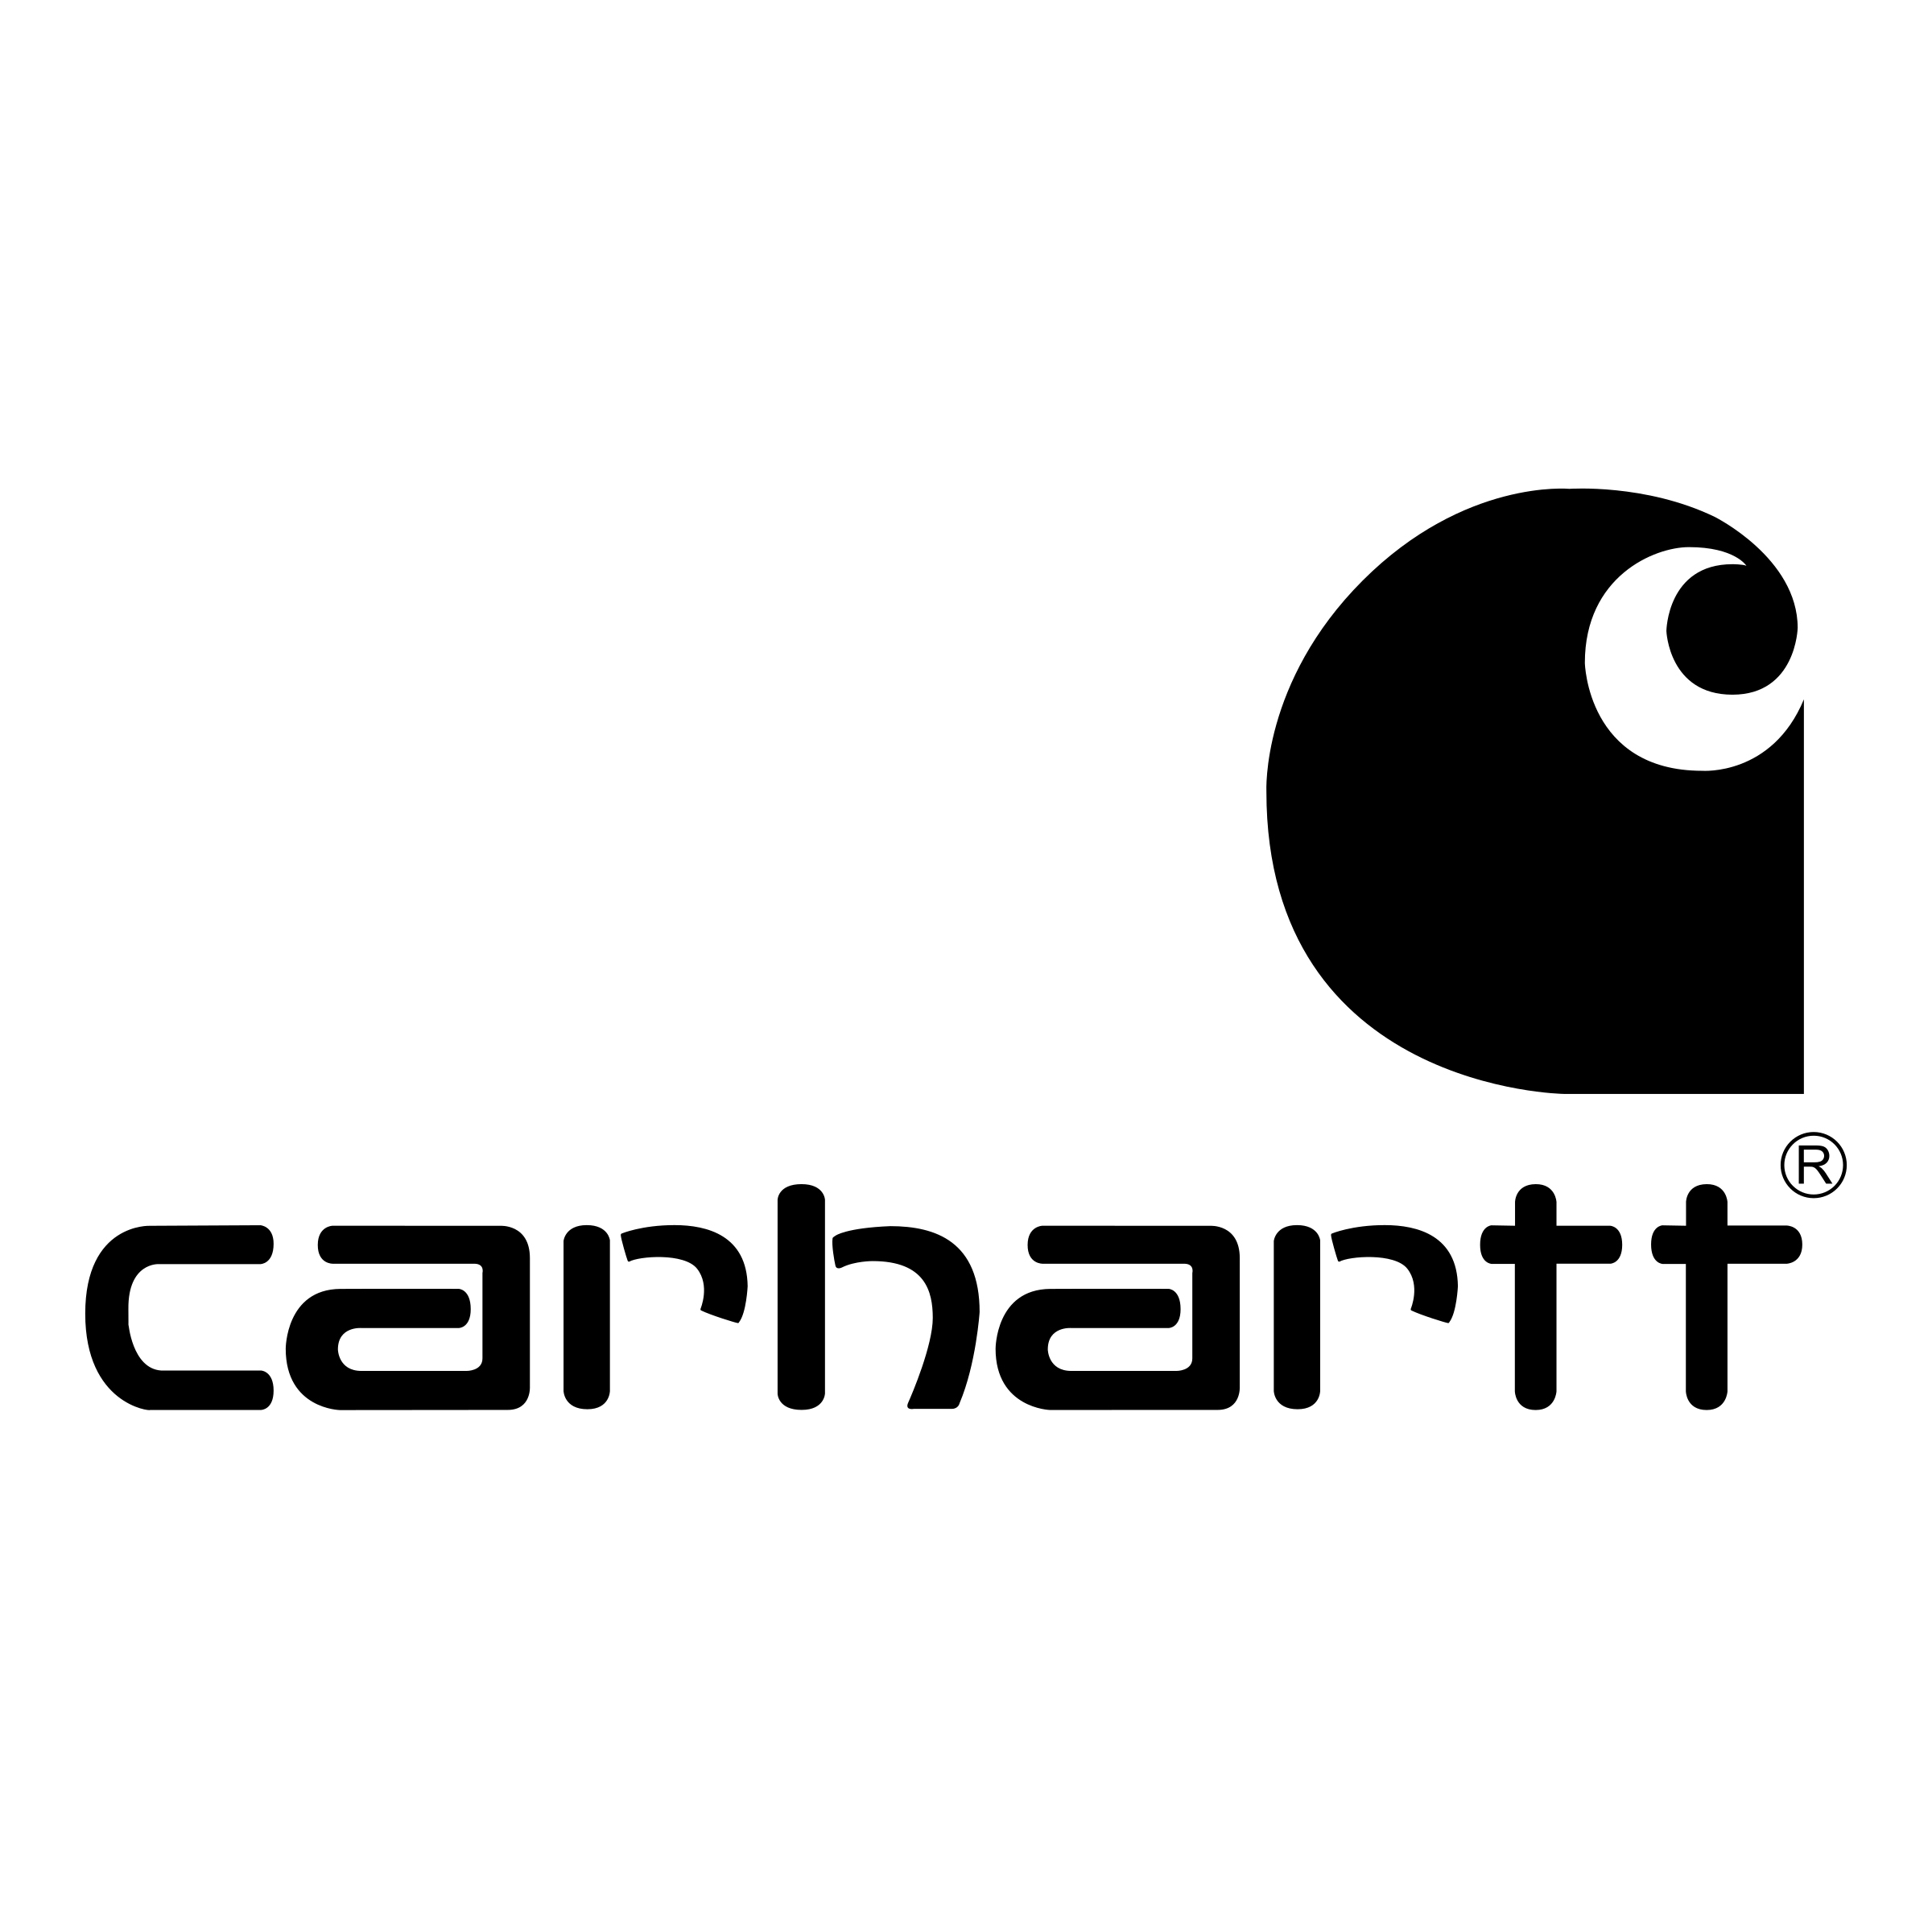 Carhartt Logo - Carhartt Logo PNG Transparent & SVG Vector